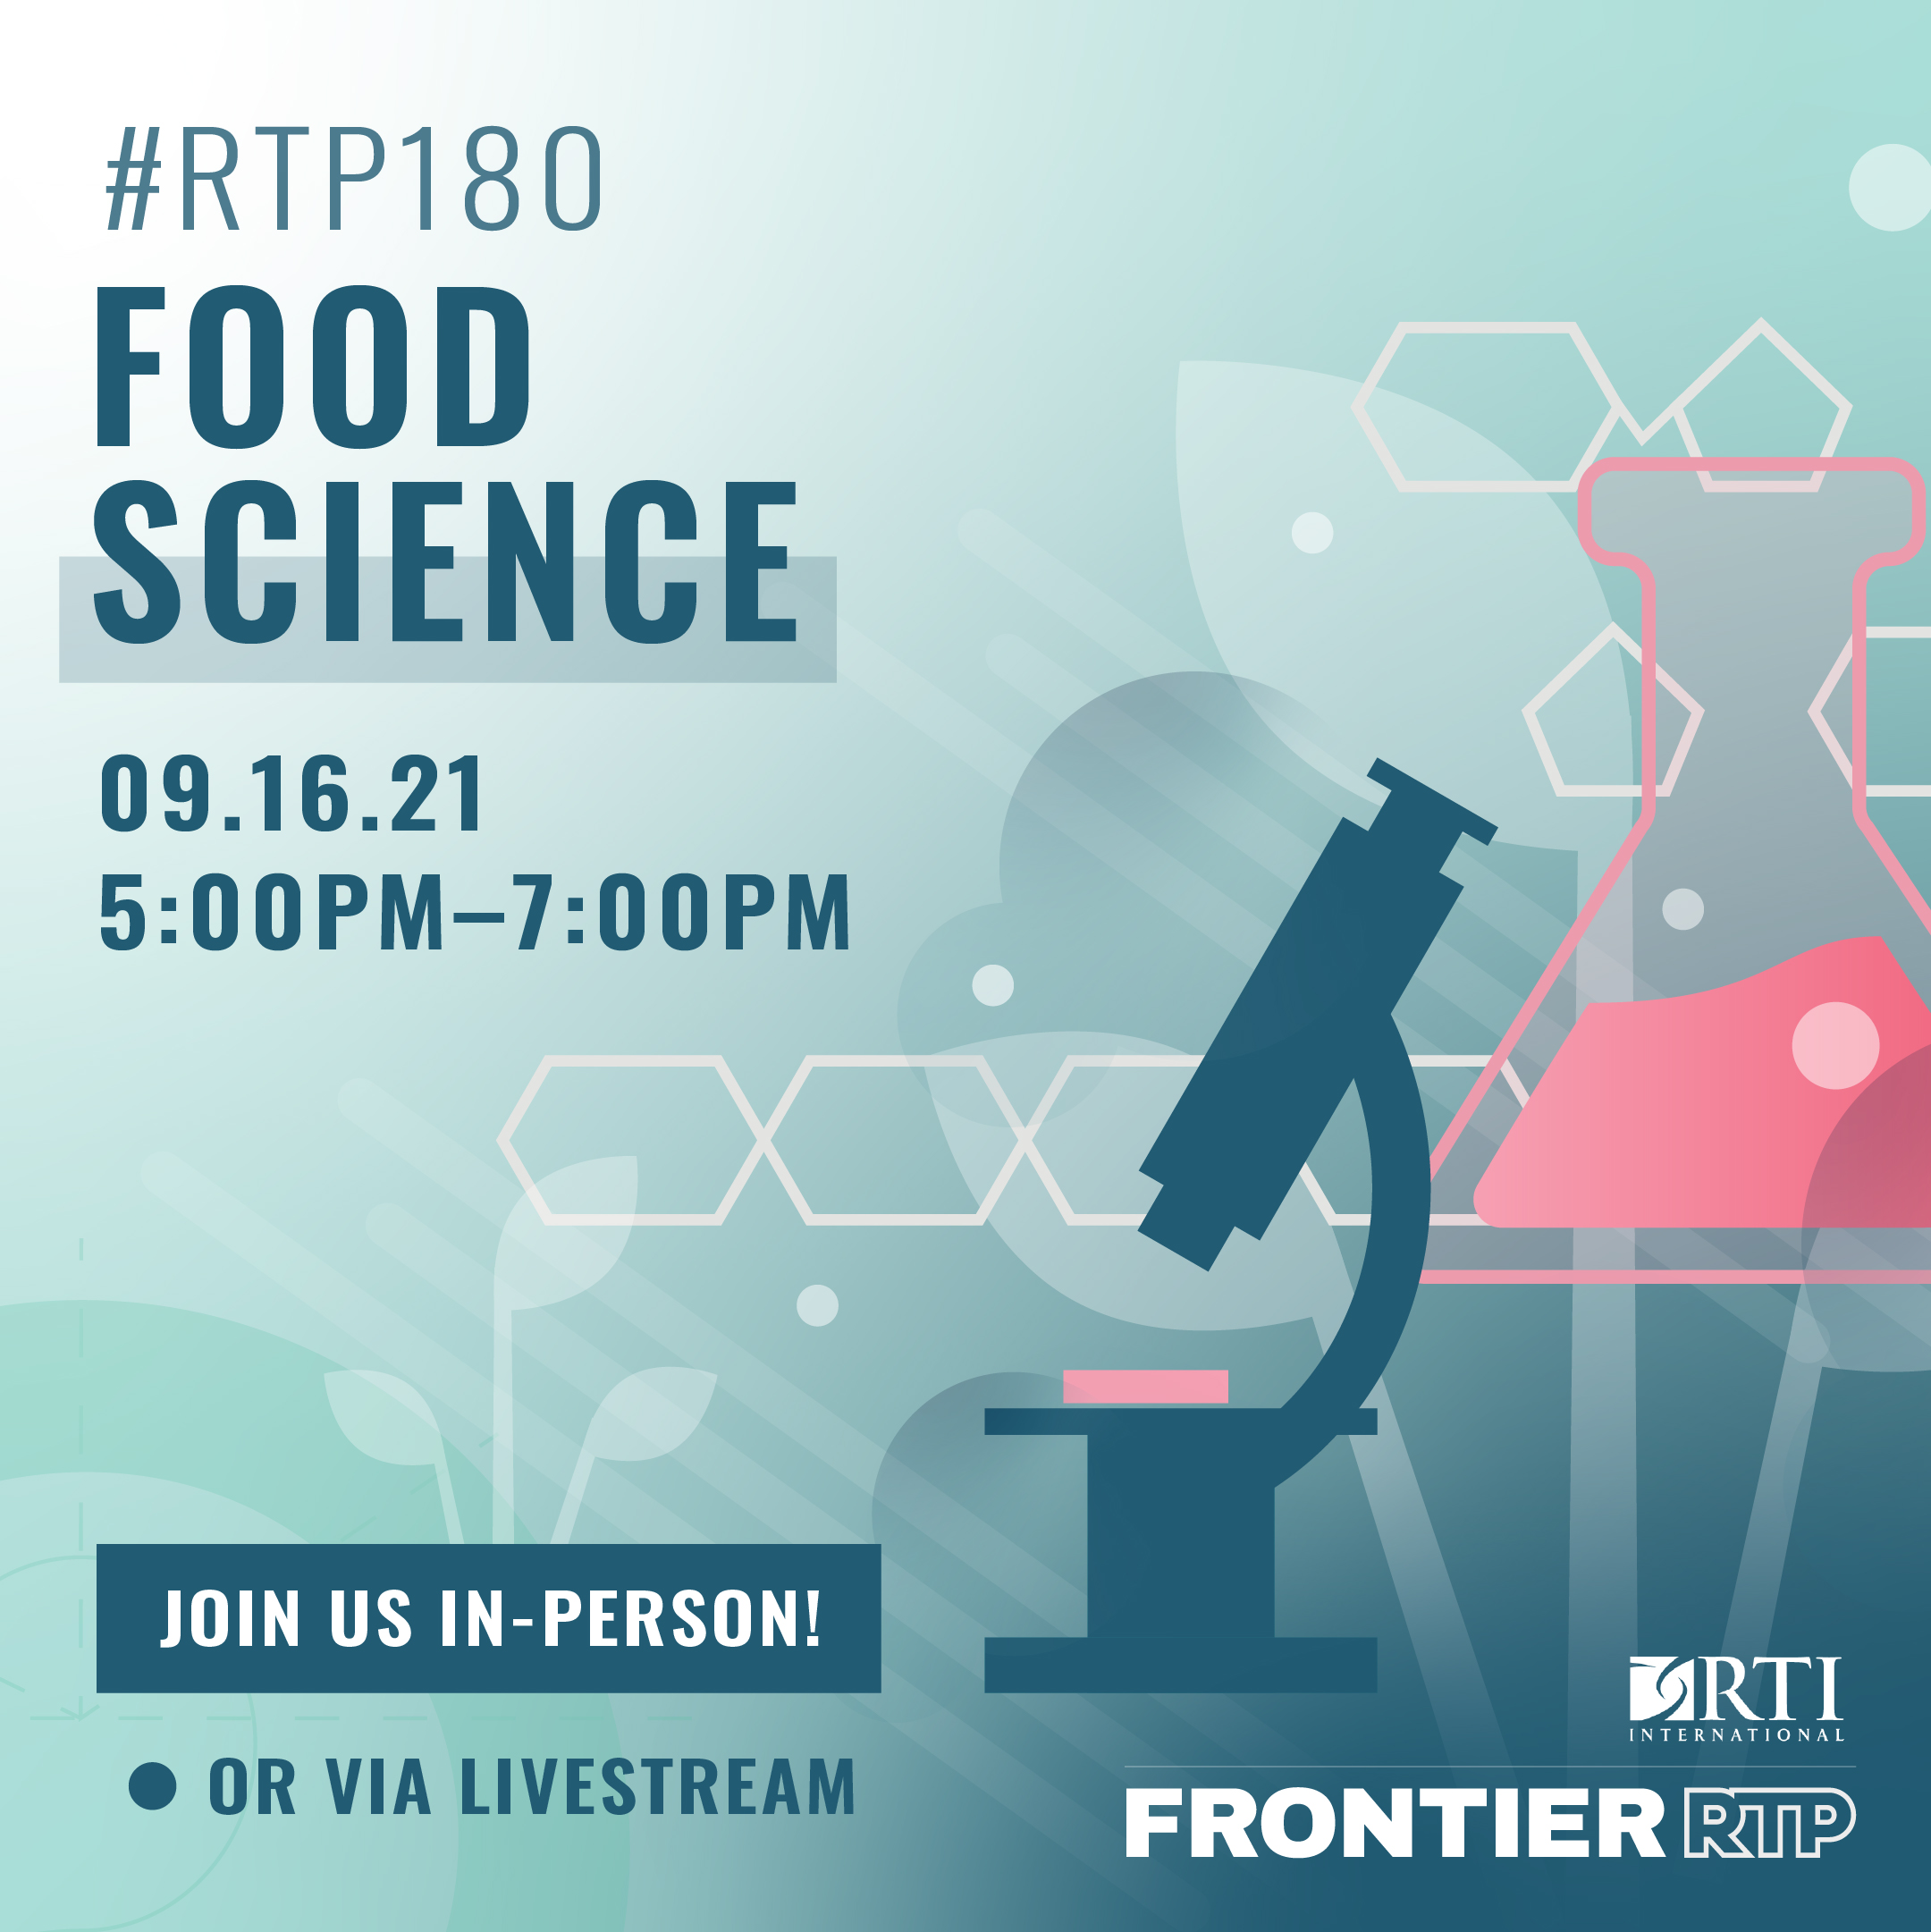 RTP180 Food Science Square Graphic